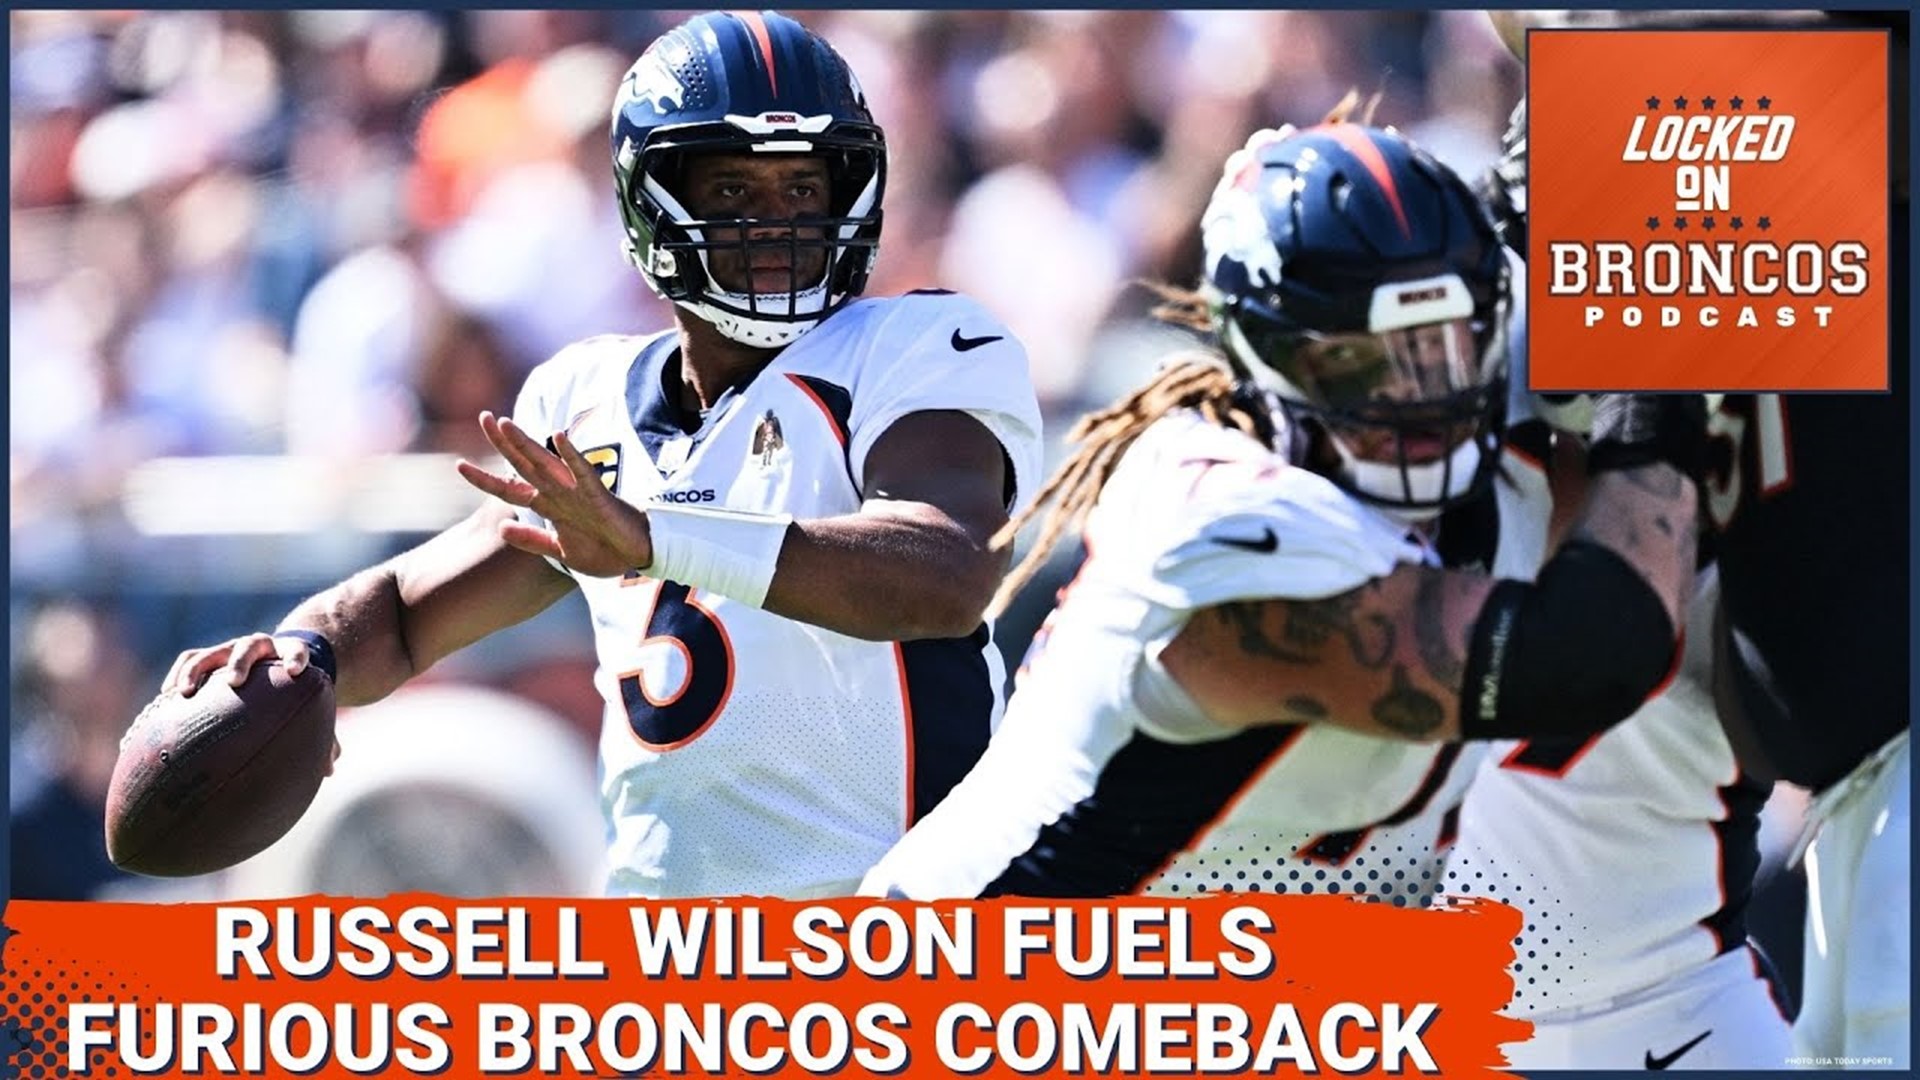 Denver Broncos, Russell Wilson leads furious comeback vs. Chicago Bears